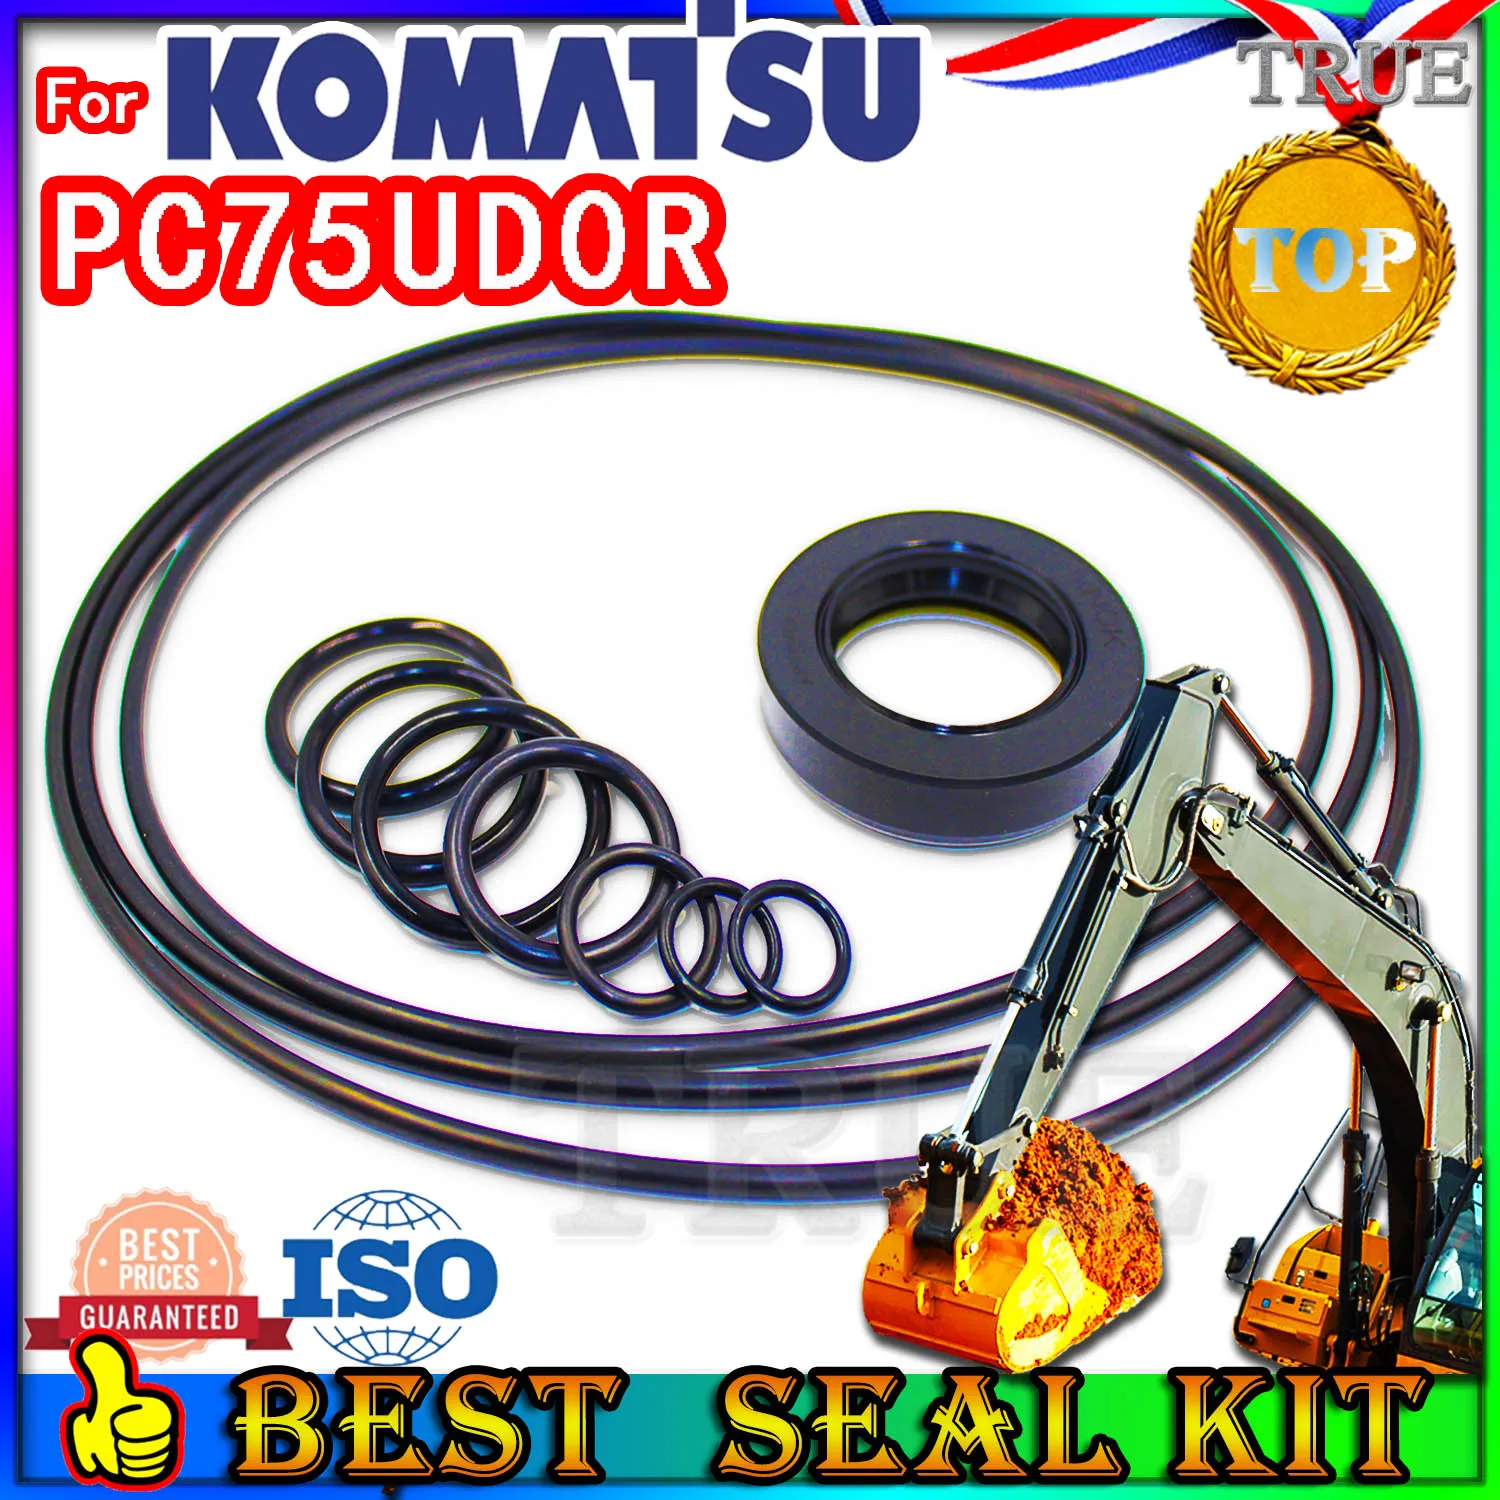 

For KOMATSU PC75UD0R Oil Seal Repair Kit Boom Arm Bucket Excavator Hydraulic Cylinder Bushing FKM High Suppliers Manufacturers